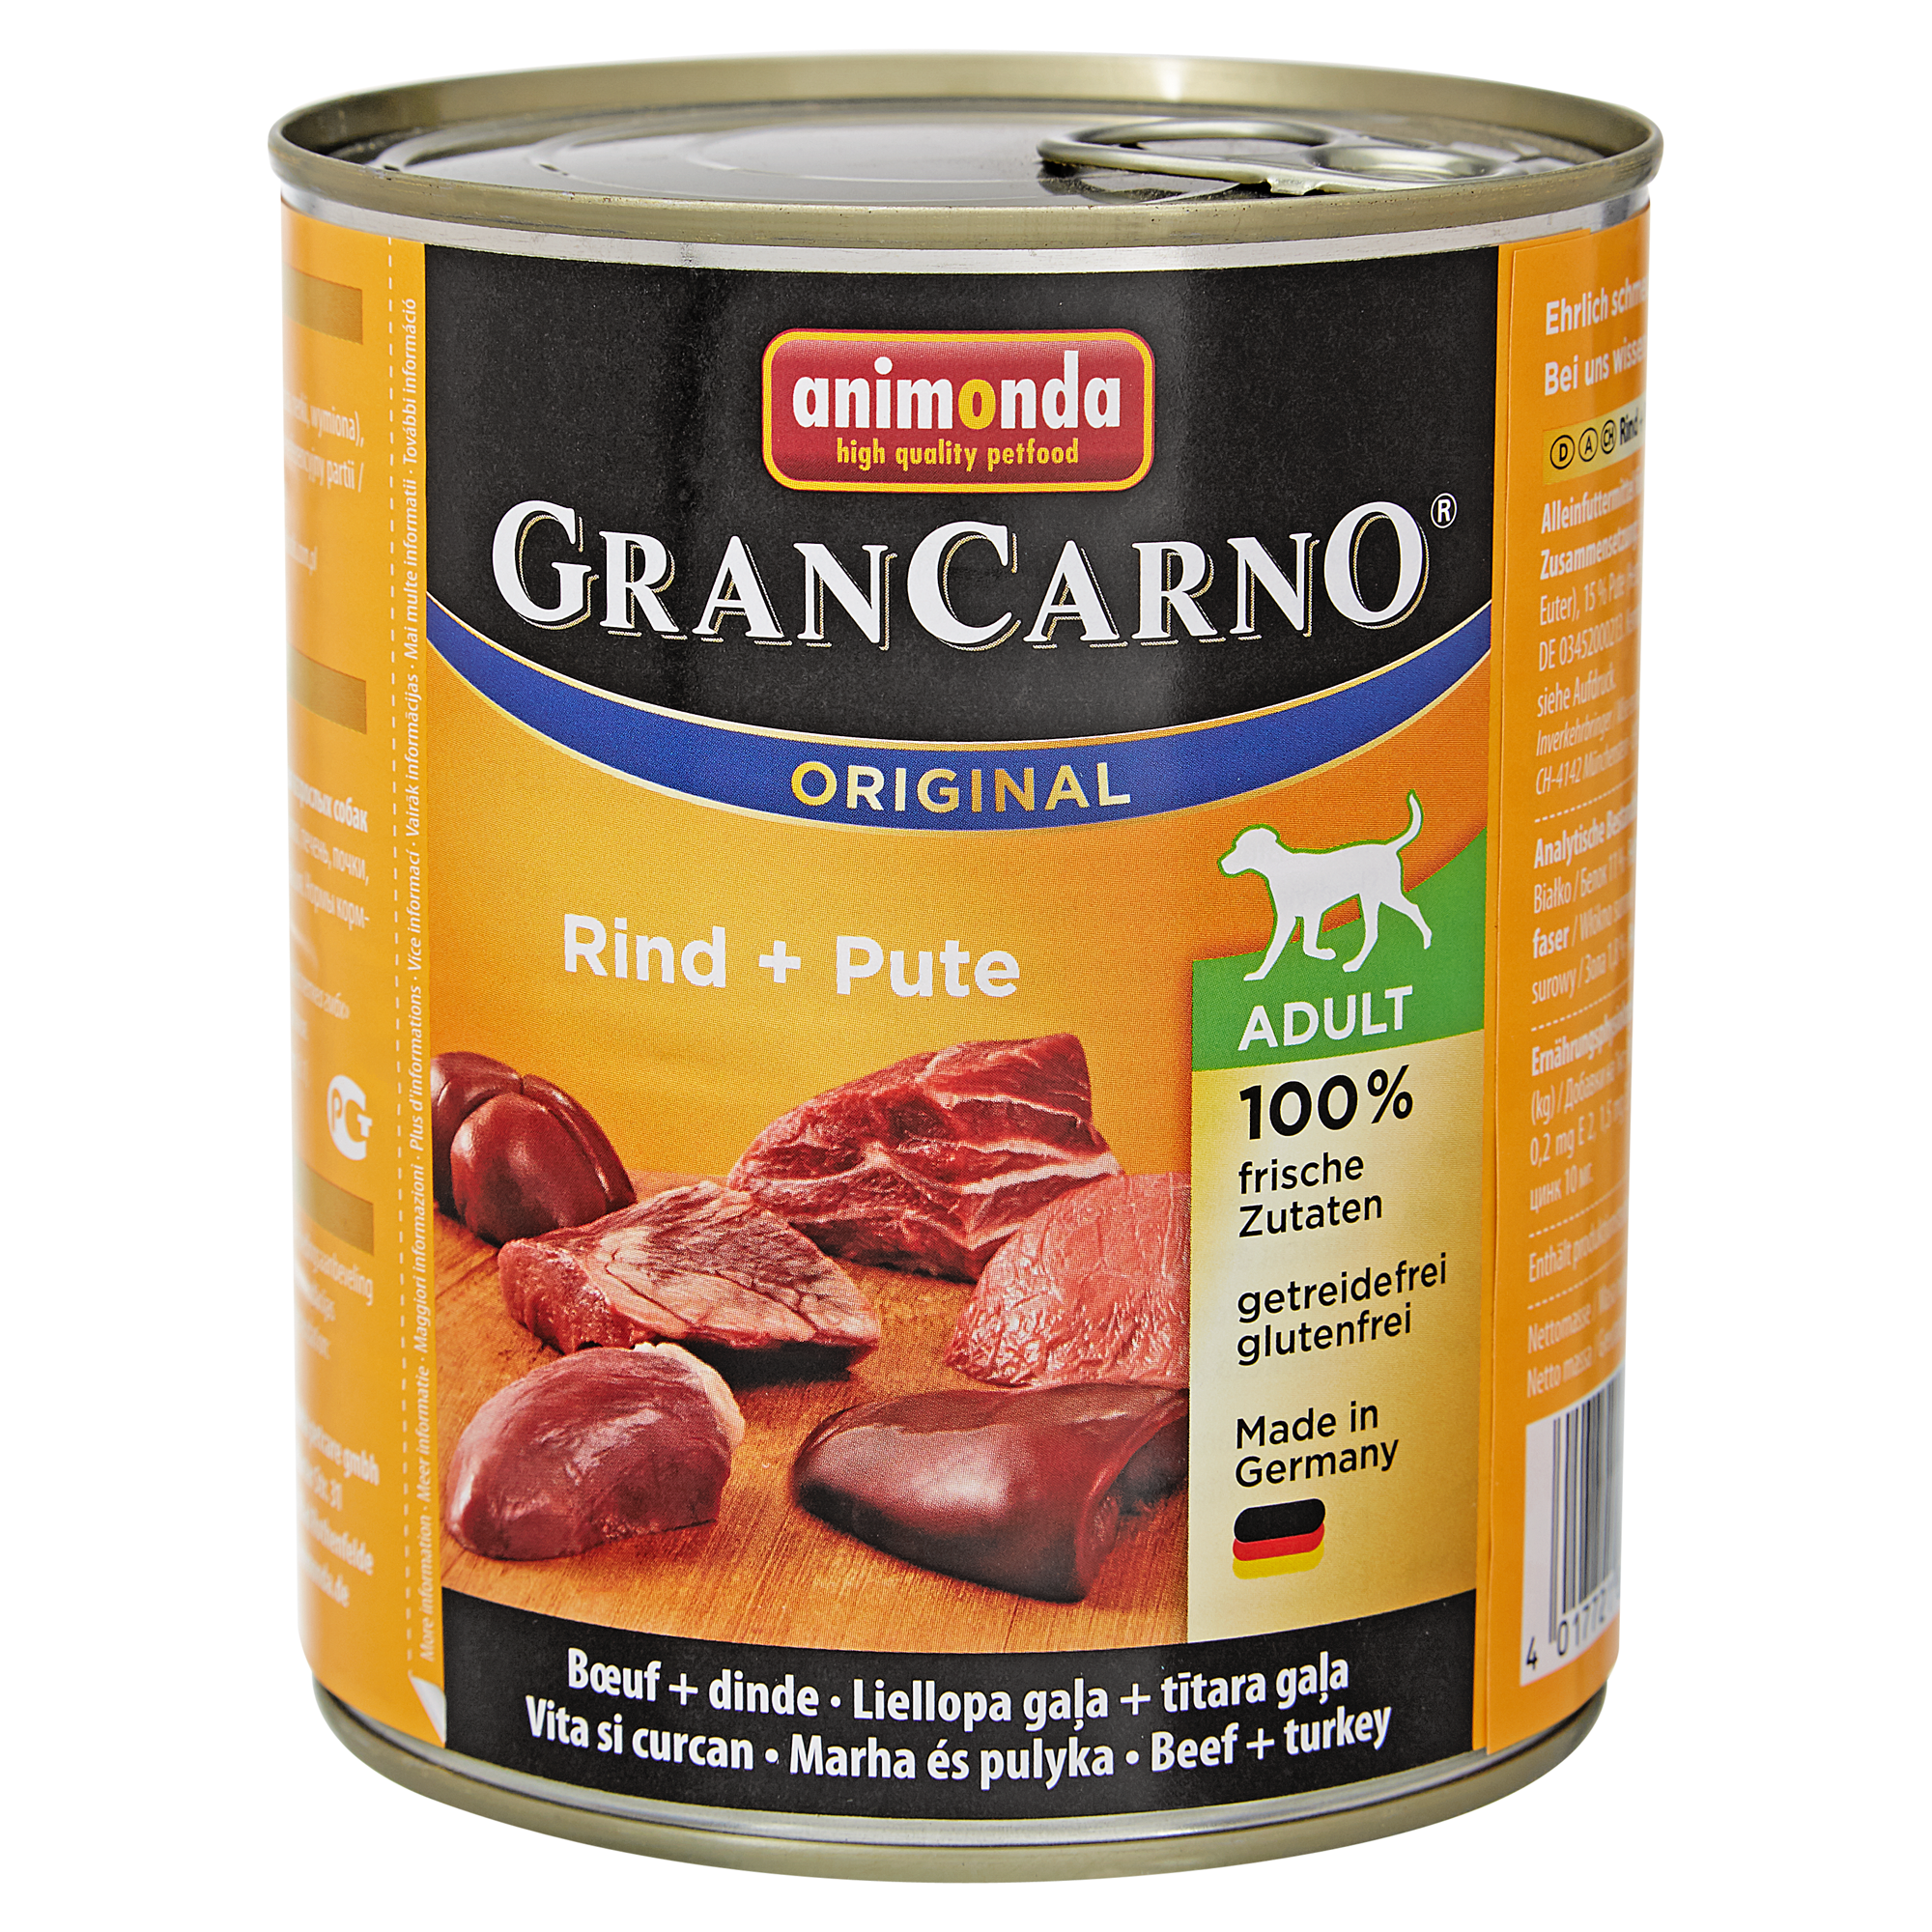 Hundenassfutter "Gran Carno" Original mit Rind/Pute 800 g + product picture